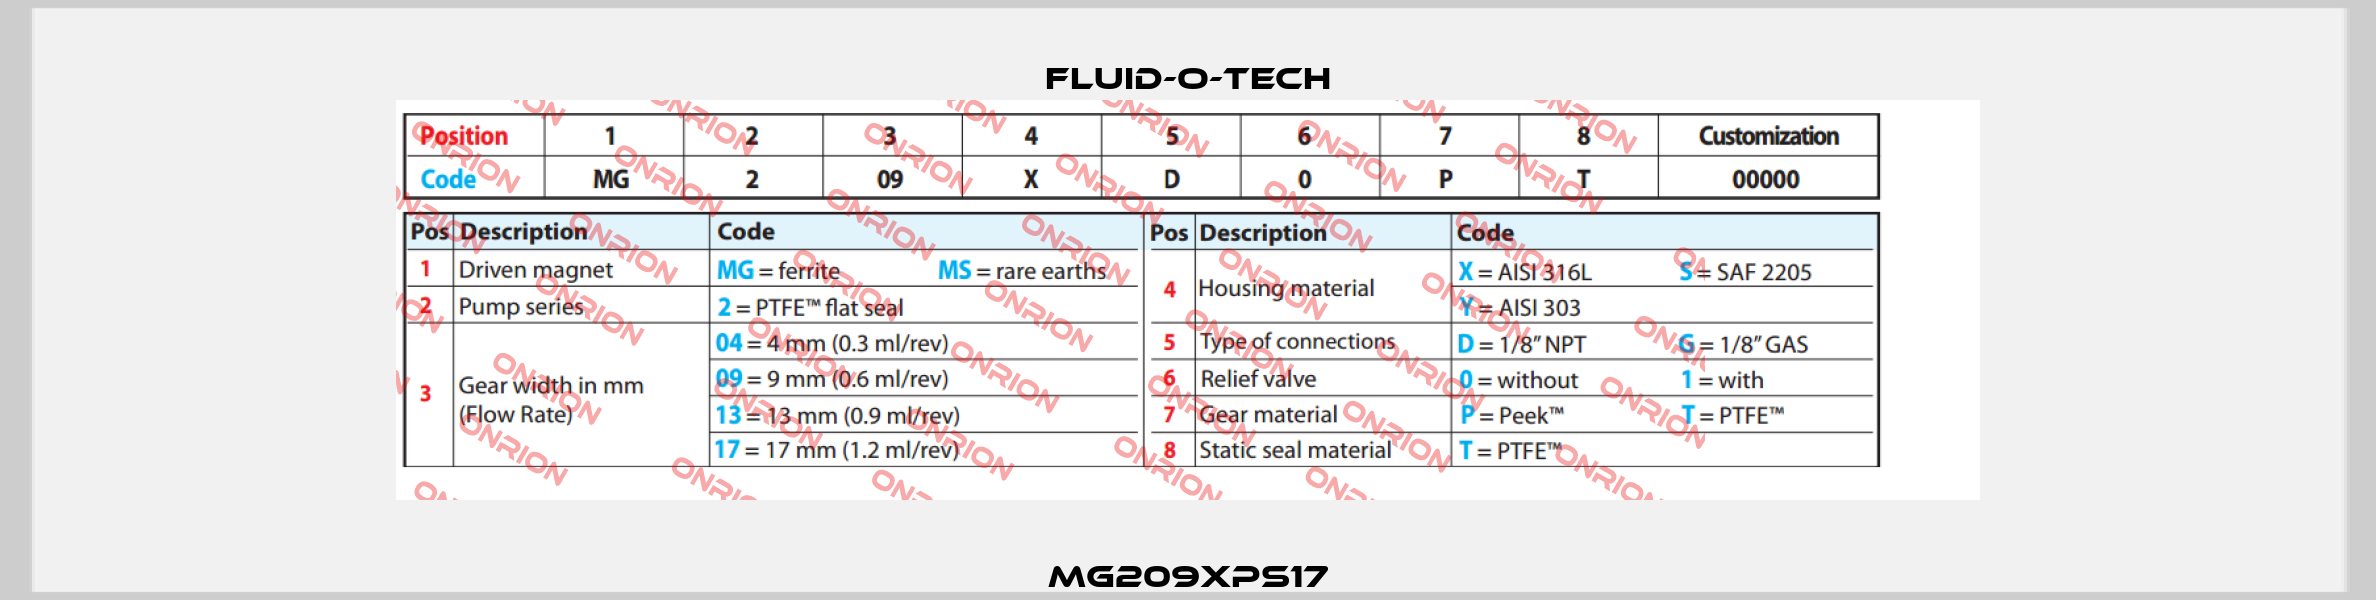 MG209XPS17 Fluid-O-Tech